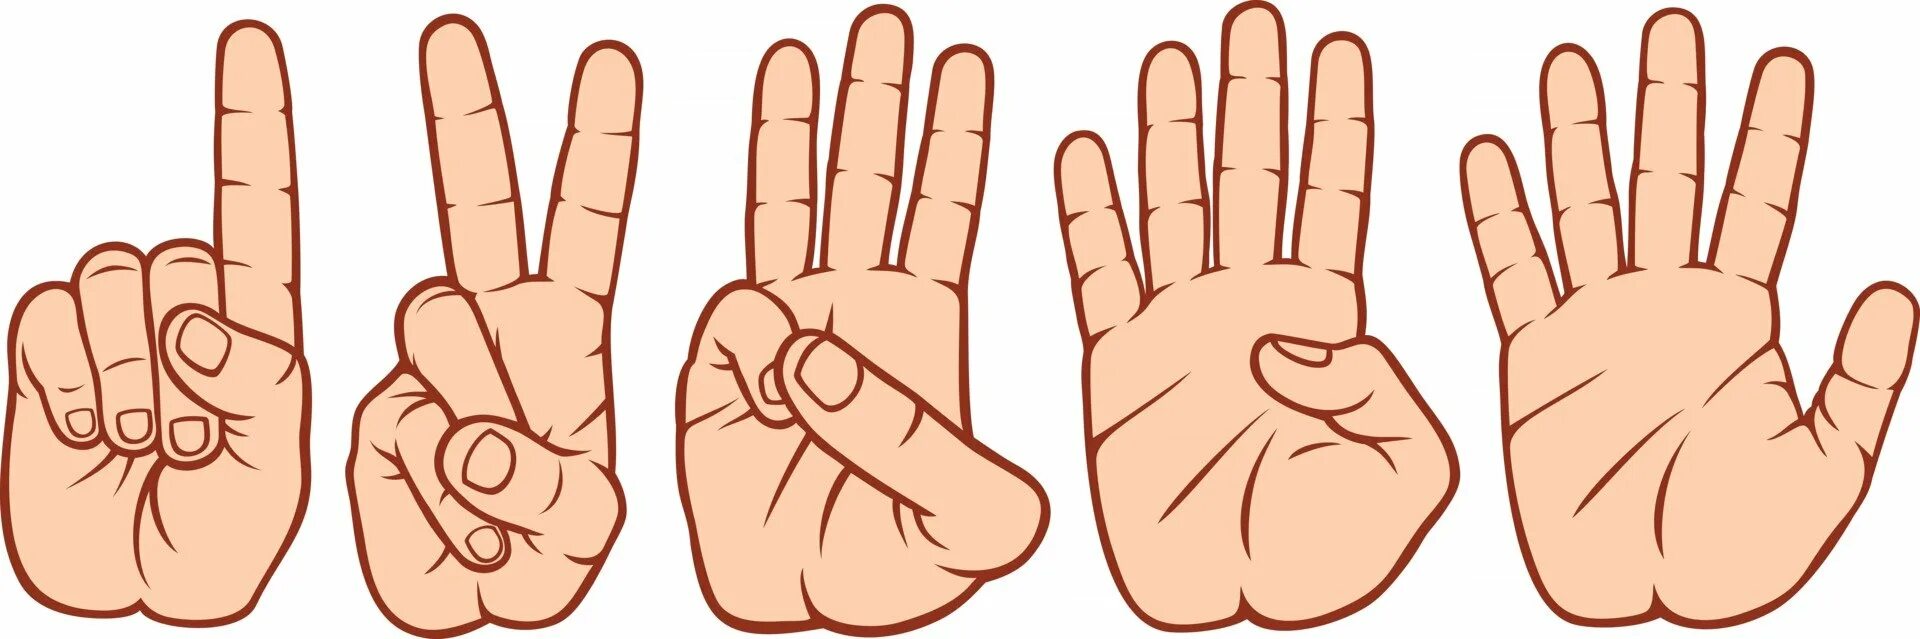 2 2 четыре пальца. Счет на пальцах. Счет на пальцах для детей. Цифры пальчиками. Числа на пальцах для детей.